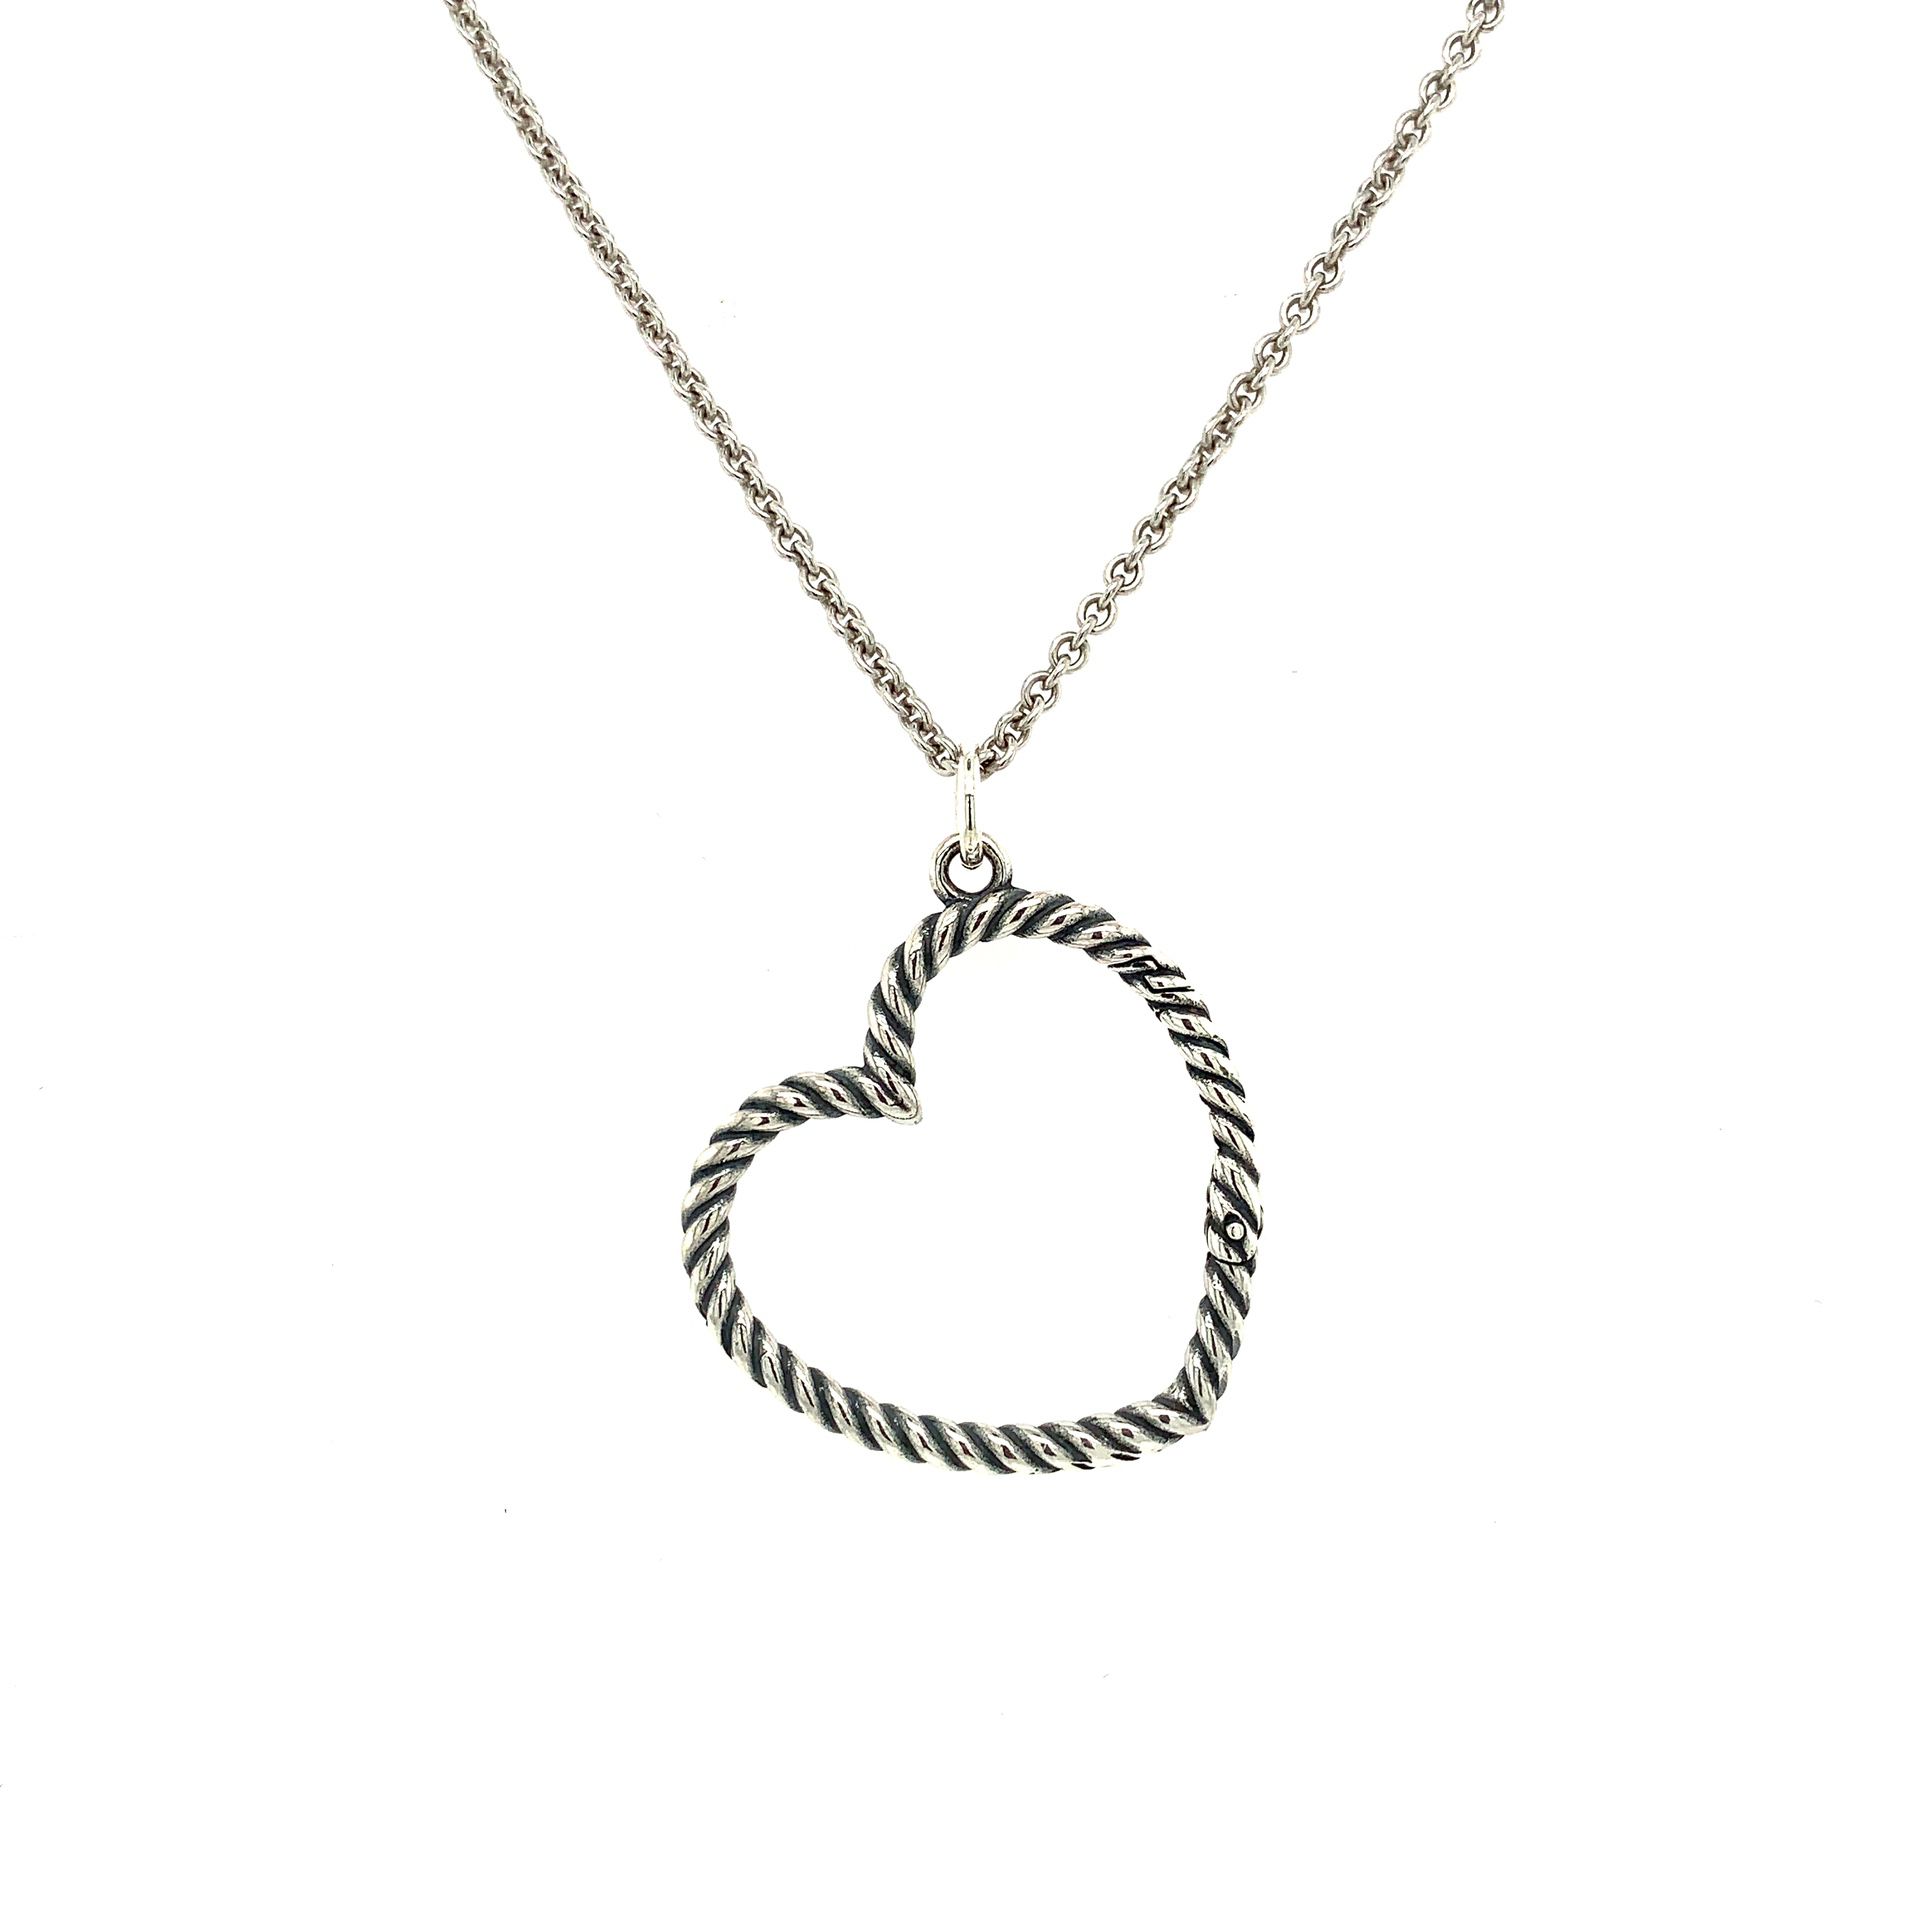 James Avery heart necklace